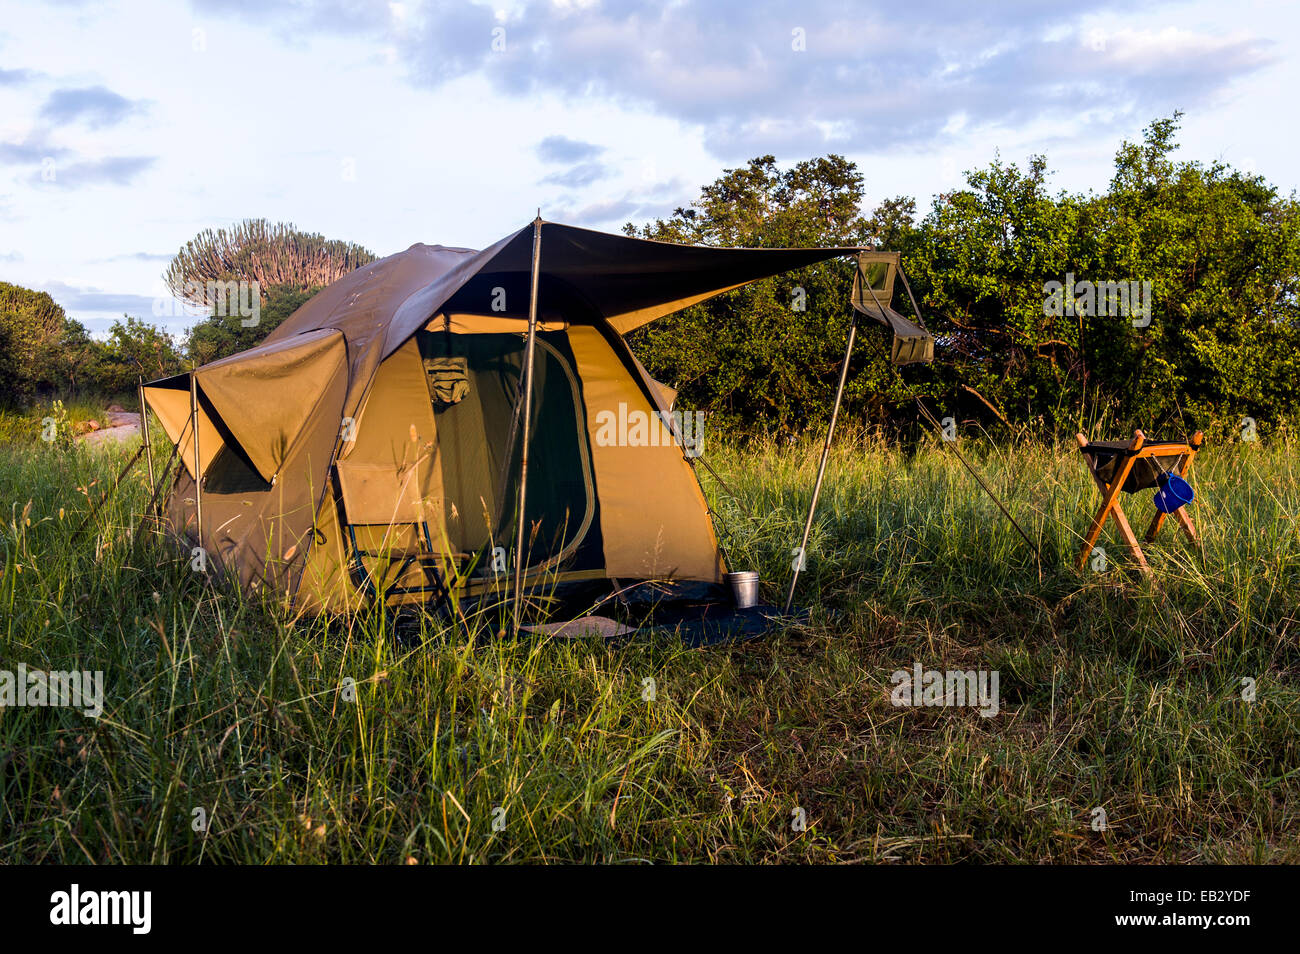 A safari tent with a verandah in a remote grassland campsite on the savannah. Stock Photo